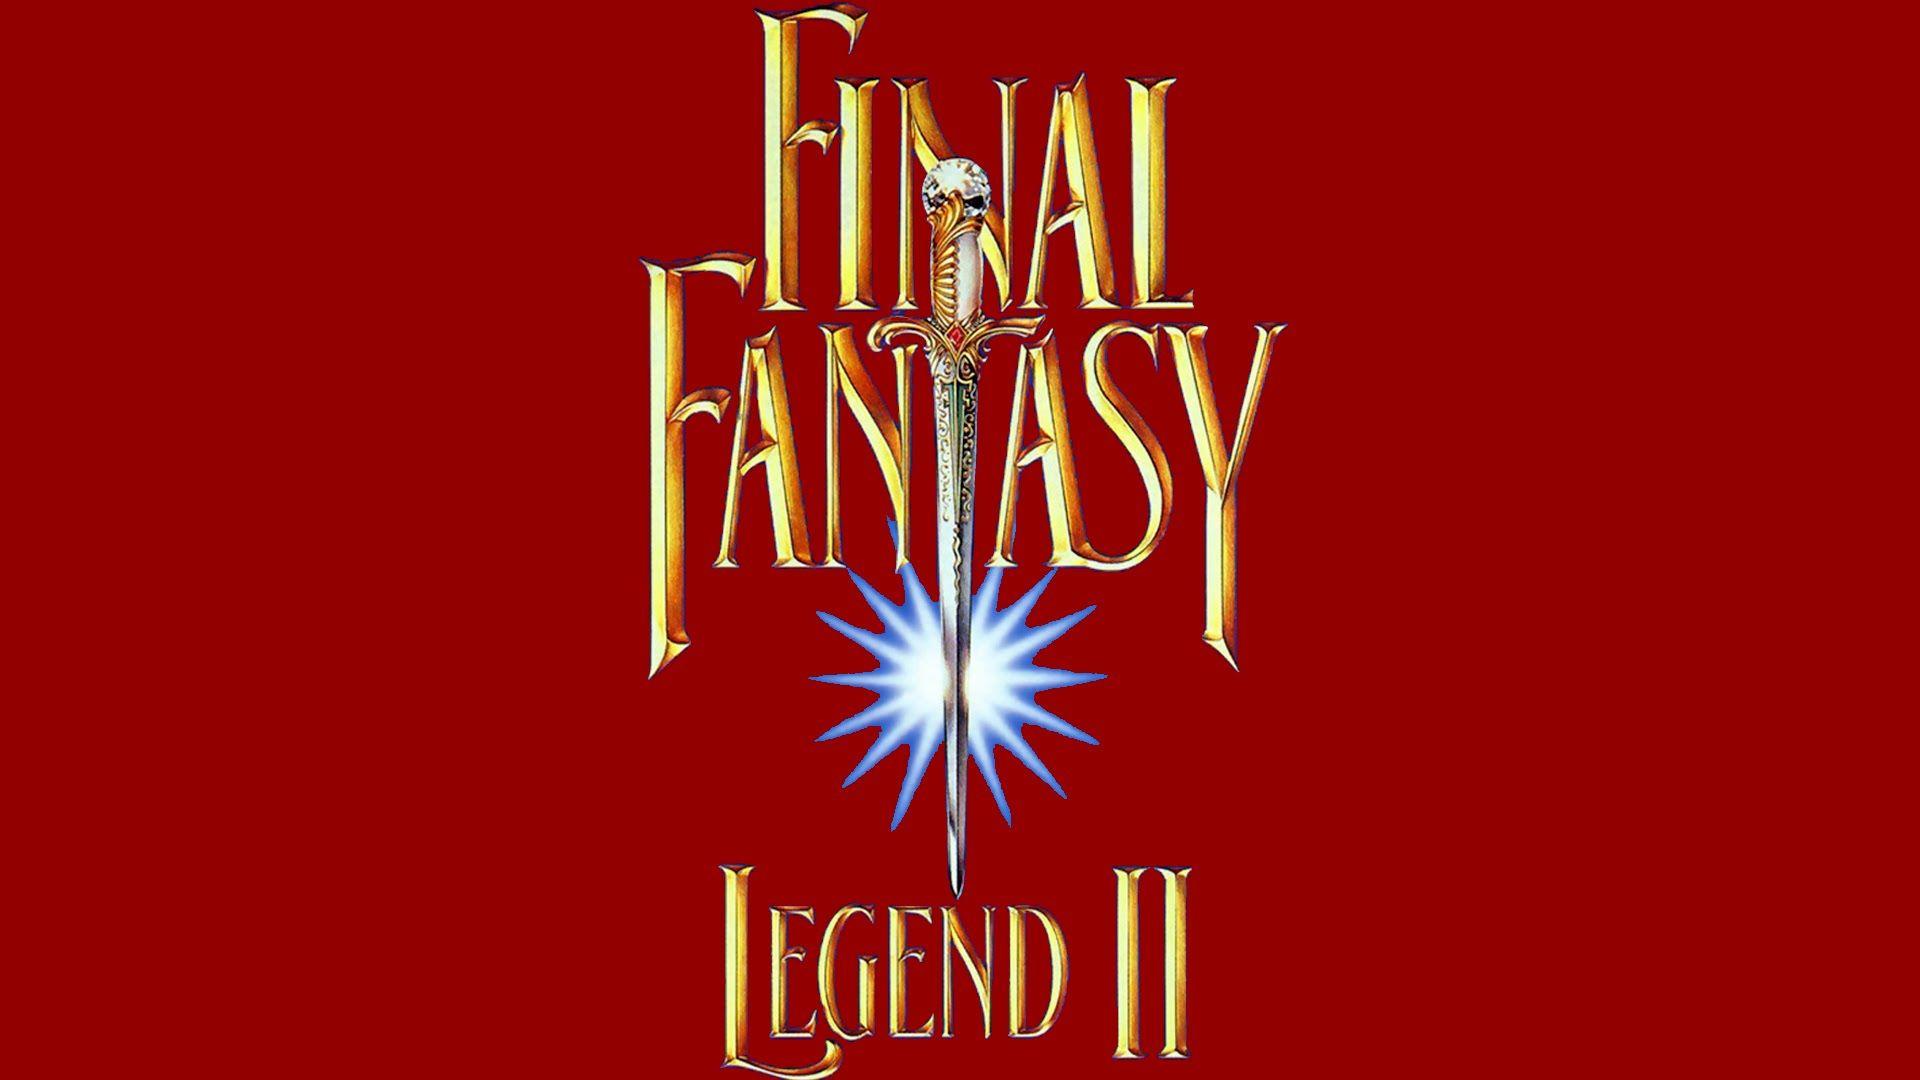 Final Fantasy Legend II. FF Legend Wallpaper. The Final Fantasy